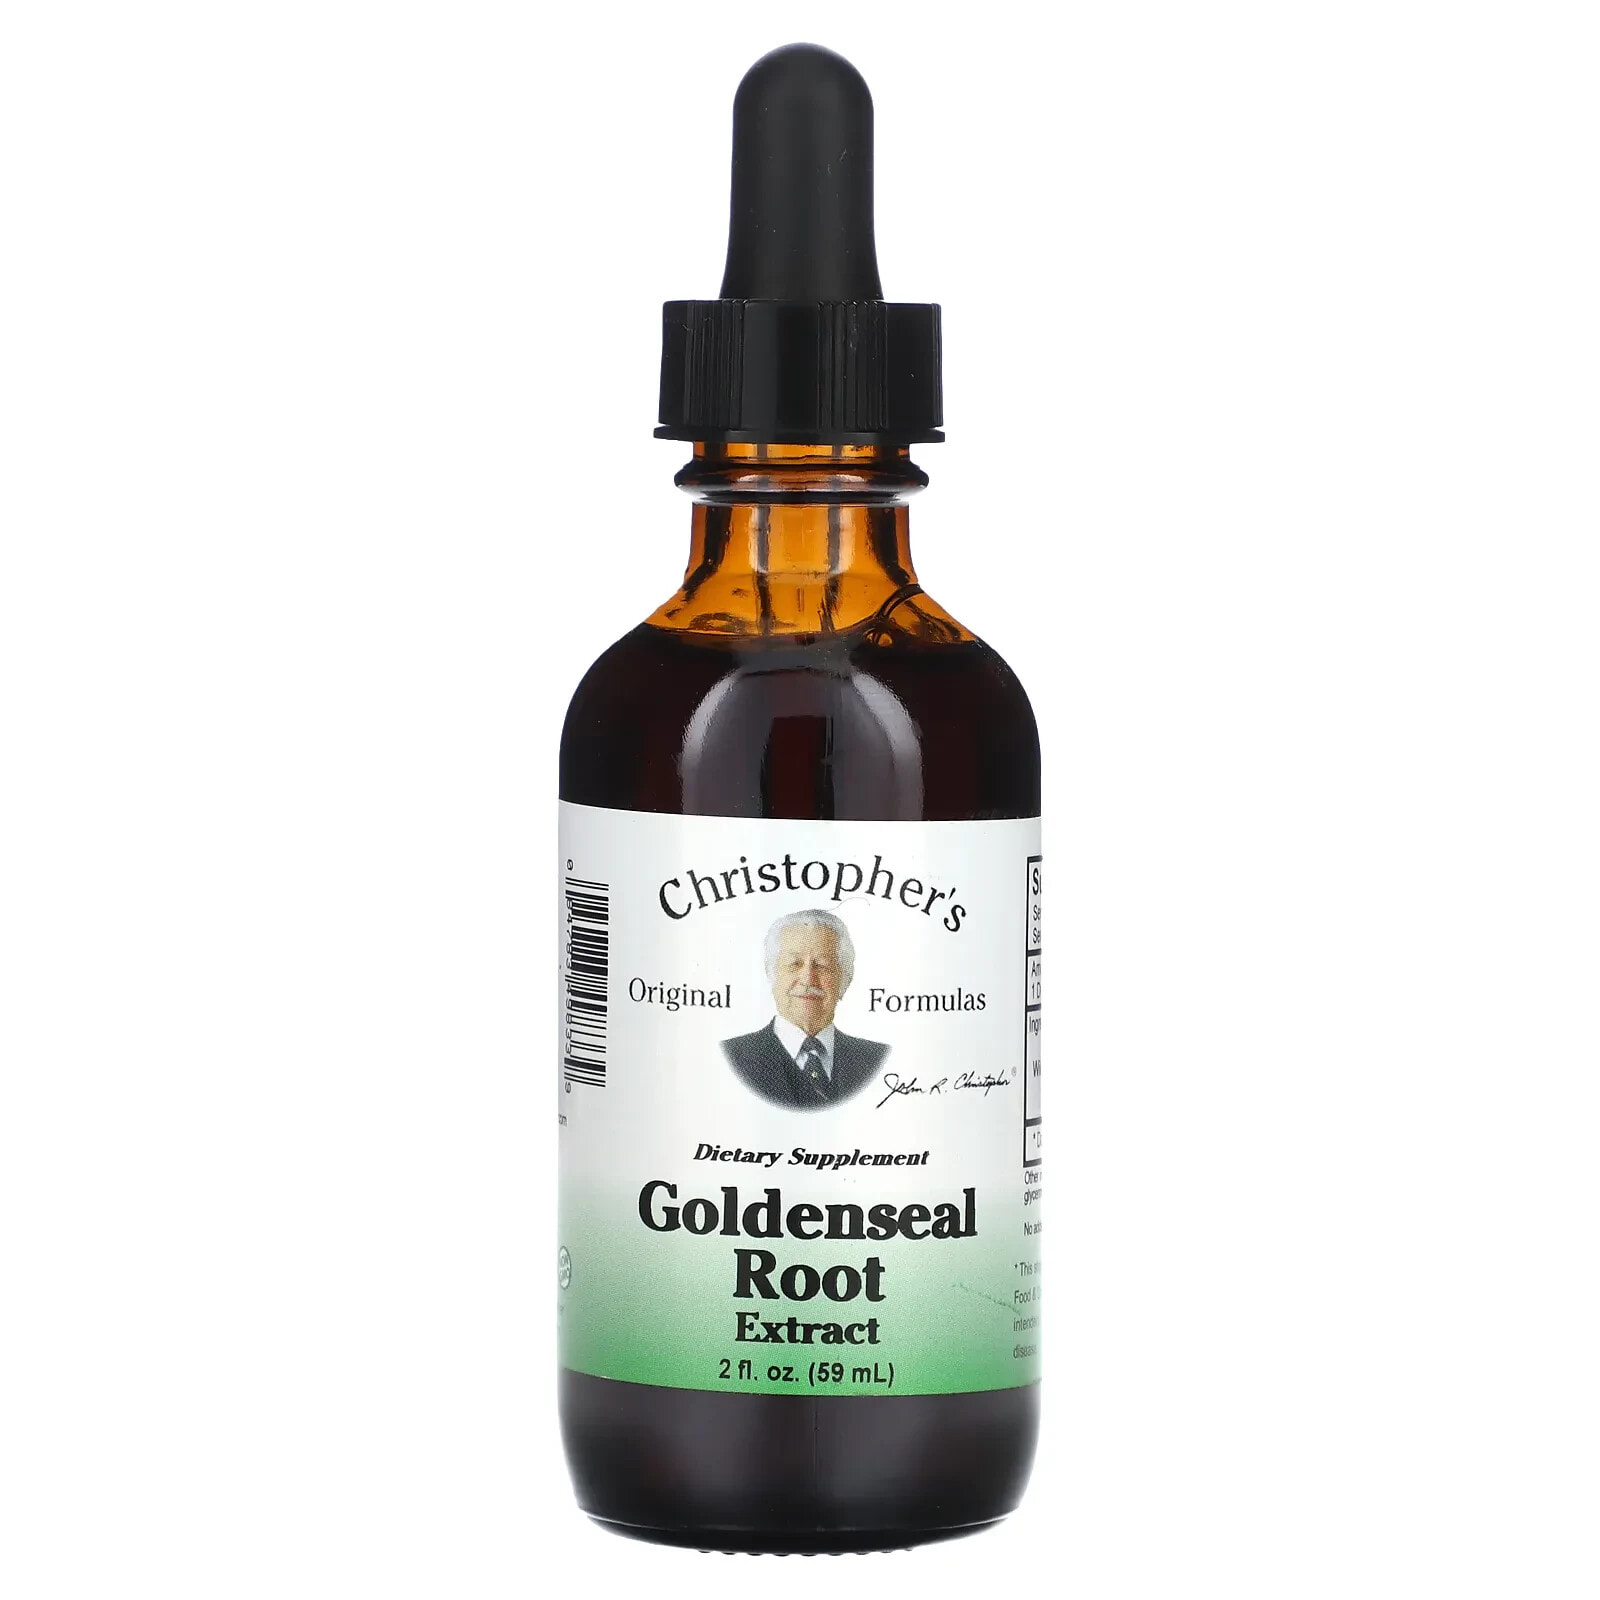 Goldenseal Root Extract, 2 fl oz (59 ml)